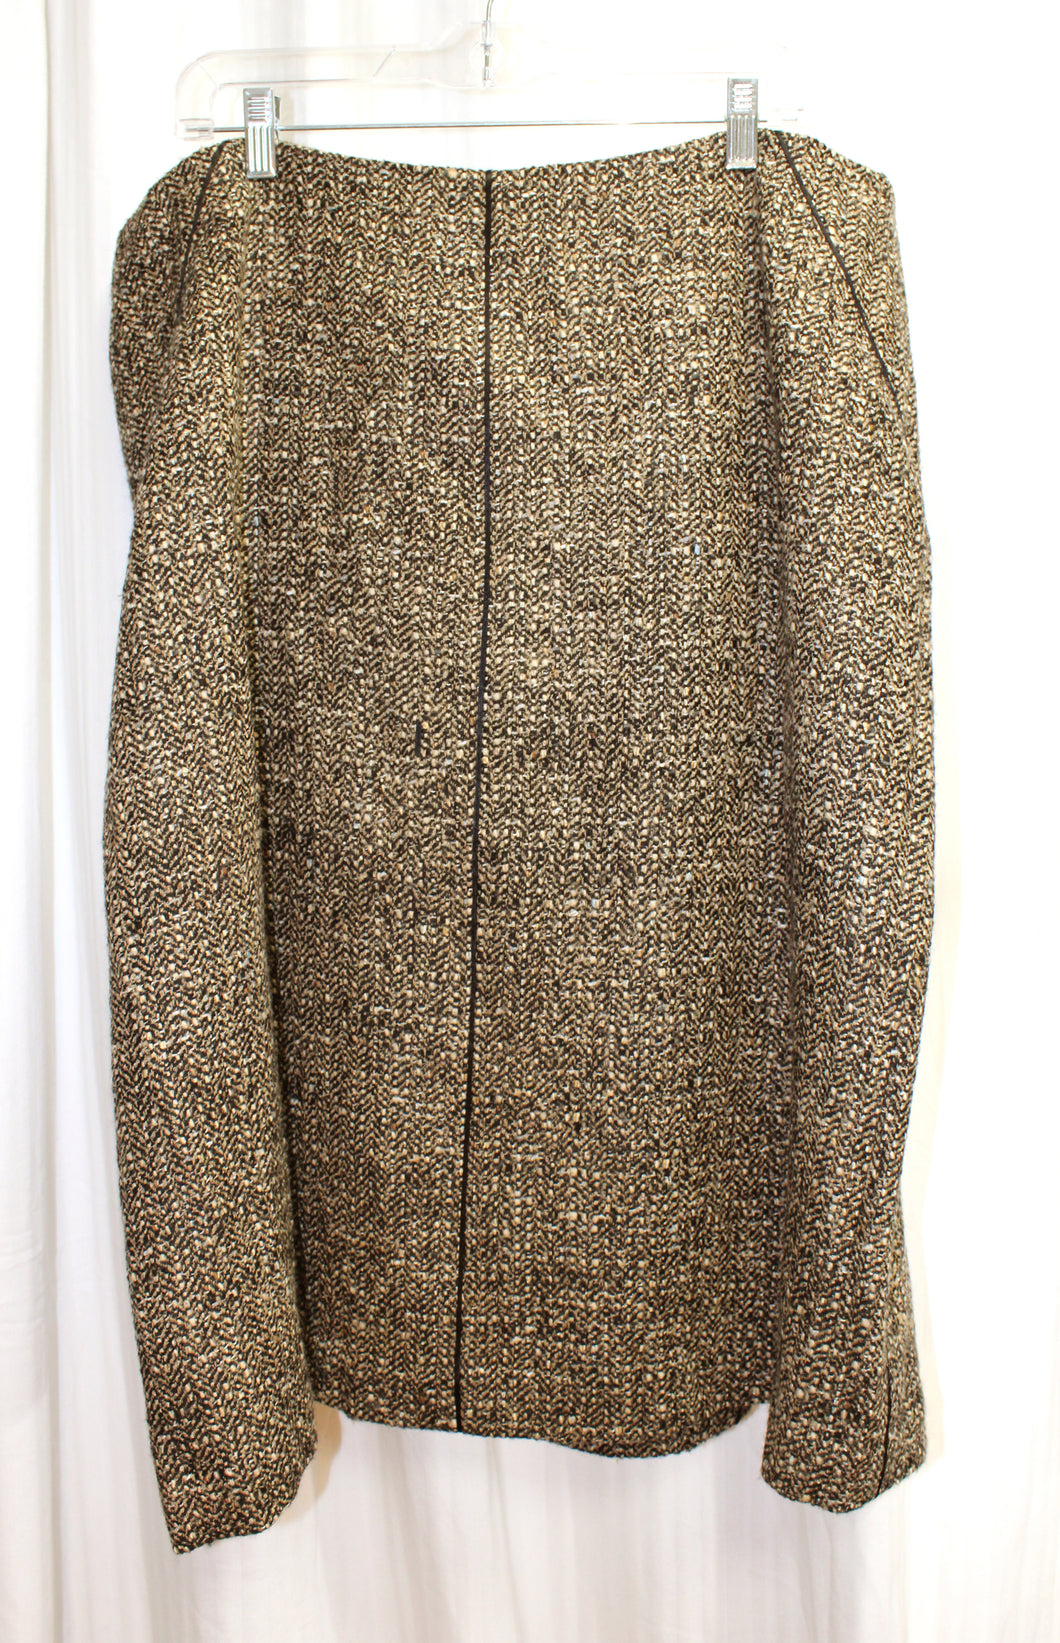 Talbots - Brown, Tans & Black Wool Blend Tweed Skirt w/ Black Piping Detailing - Size 22W